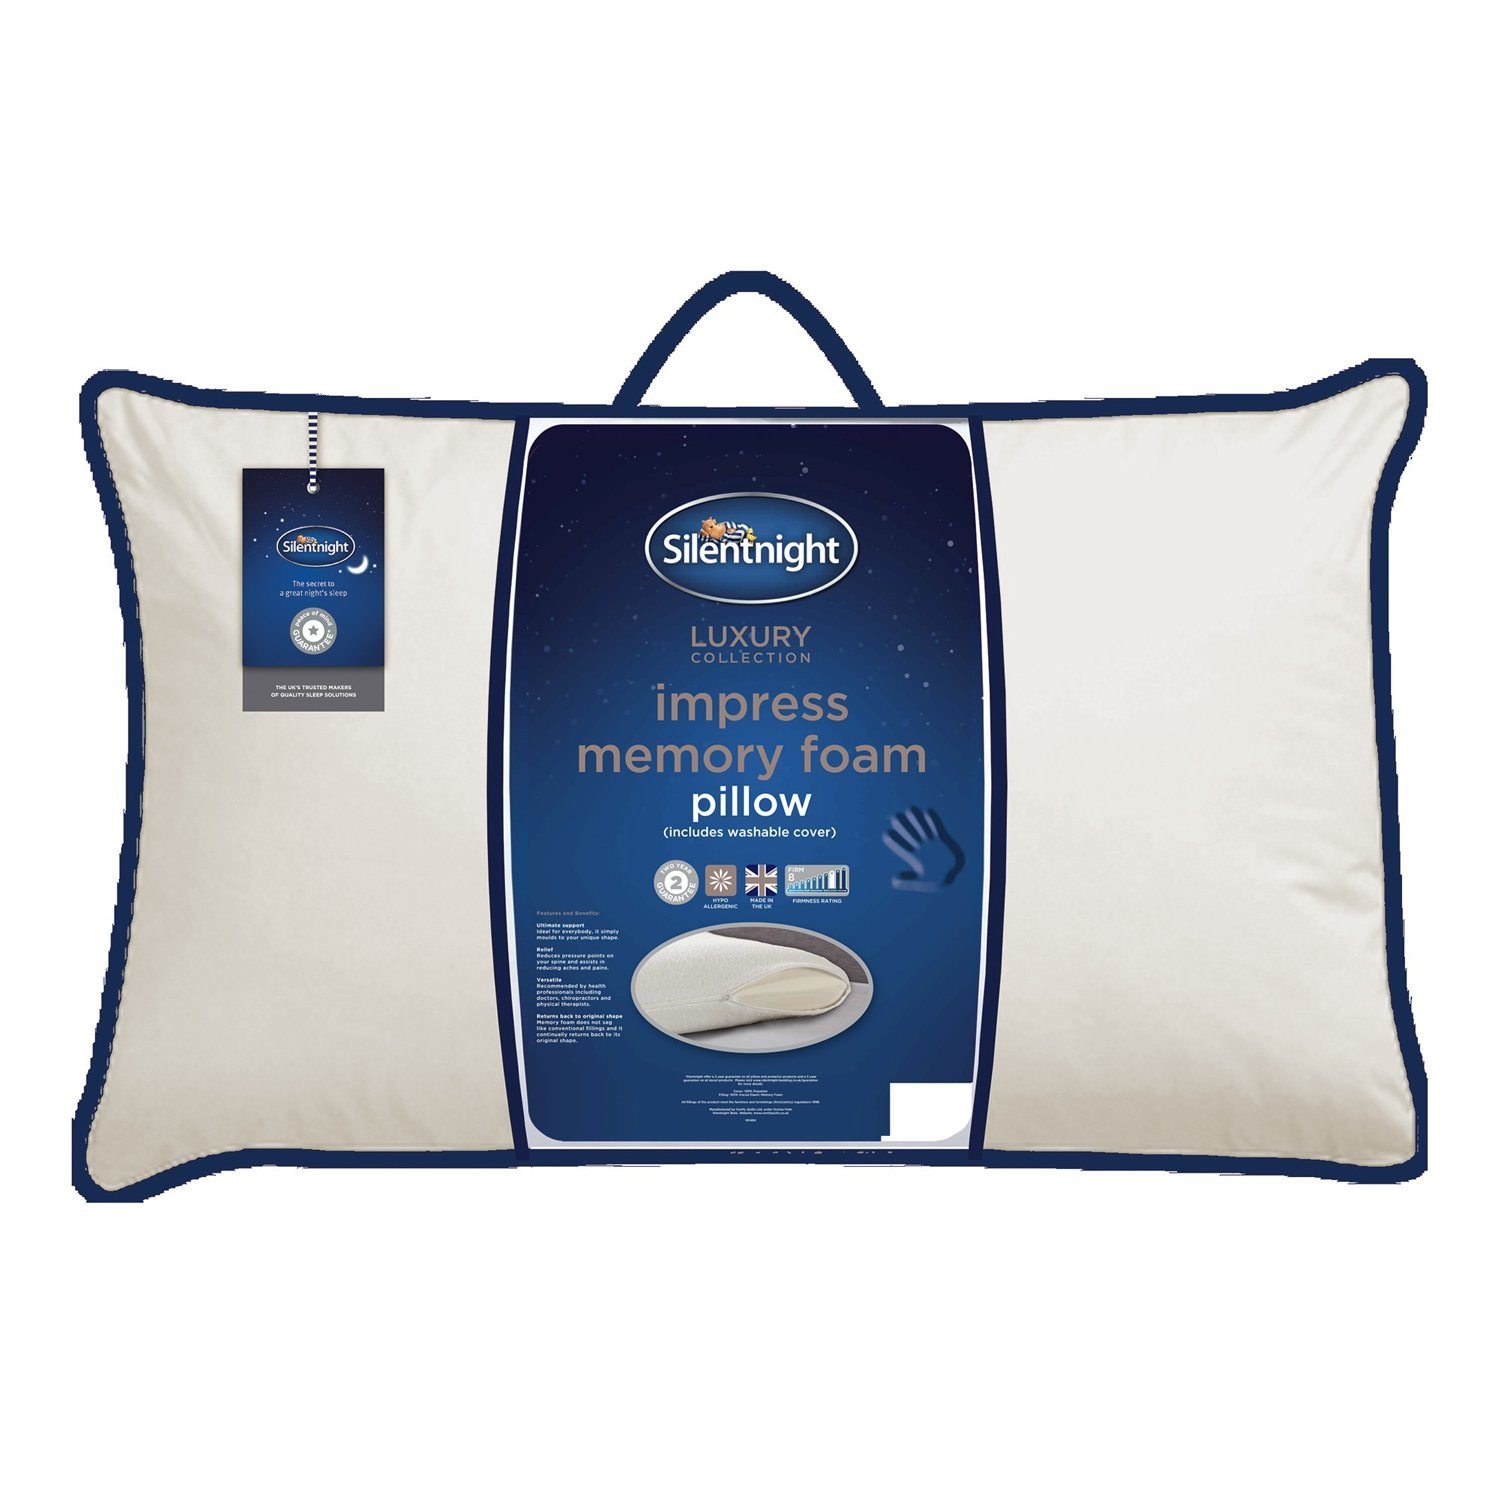 Silentnight Impress Deluxe Memory Foam Pillow Review